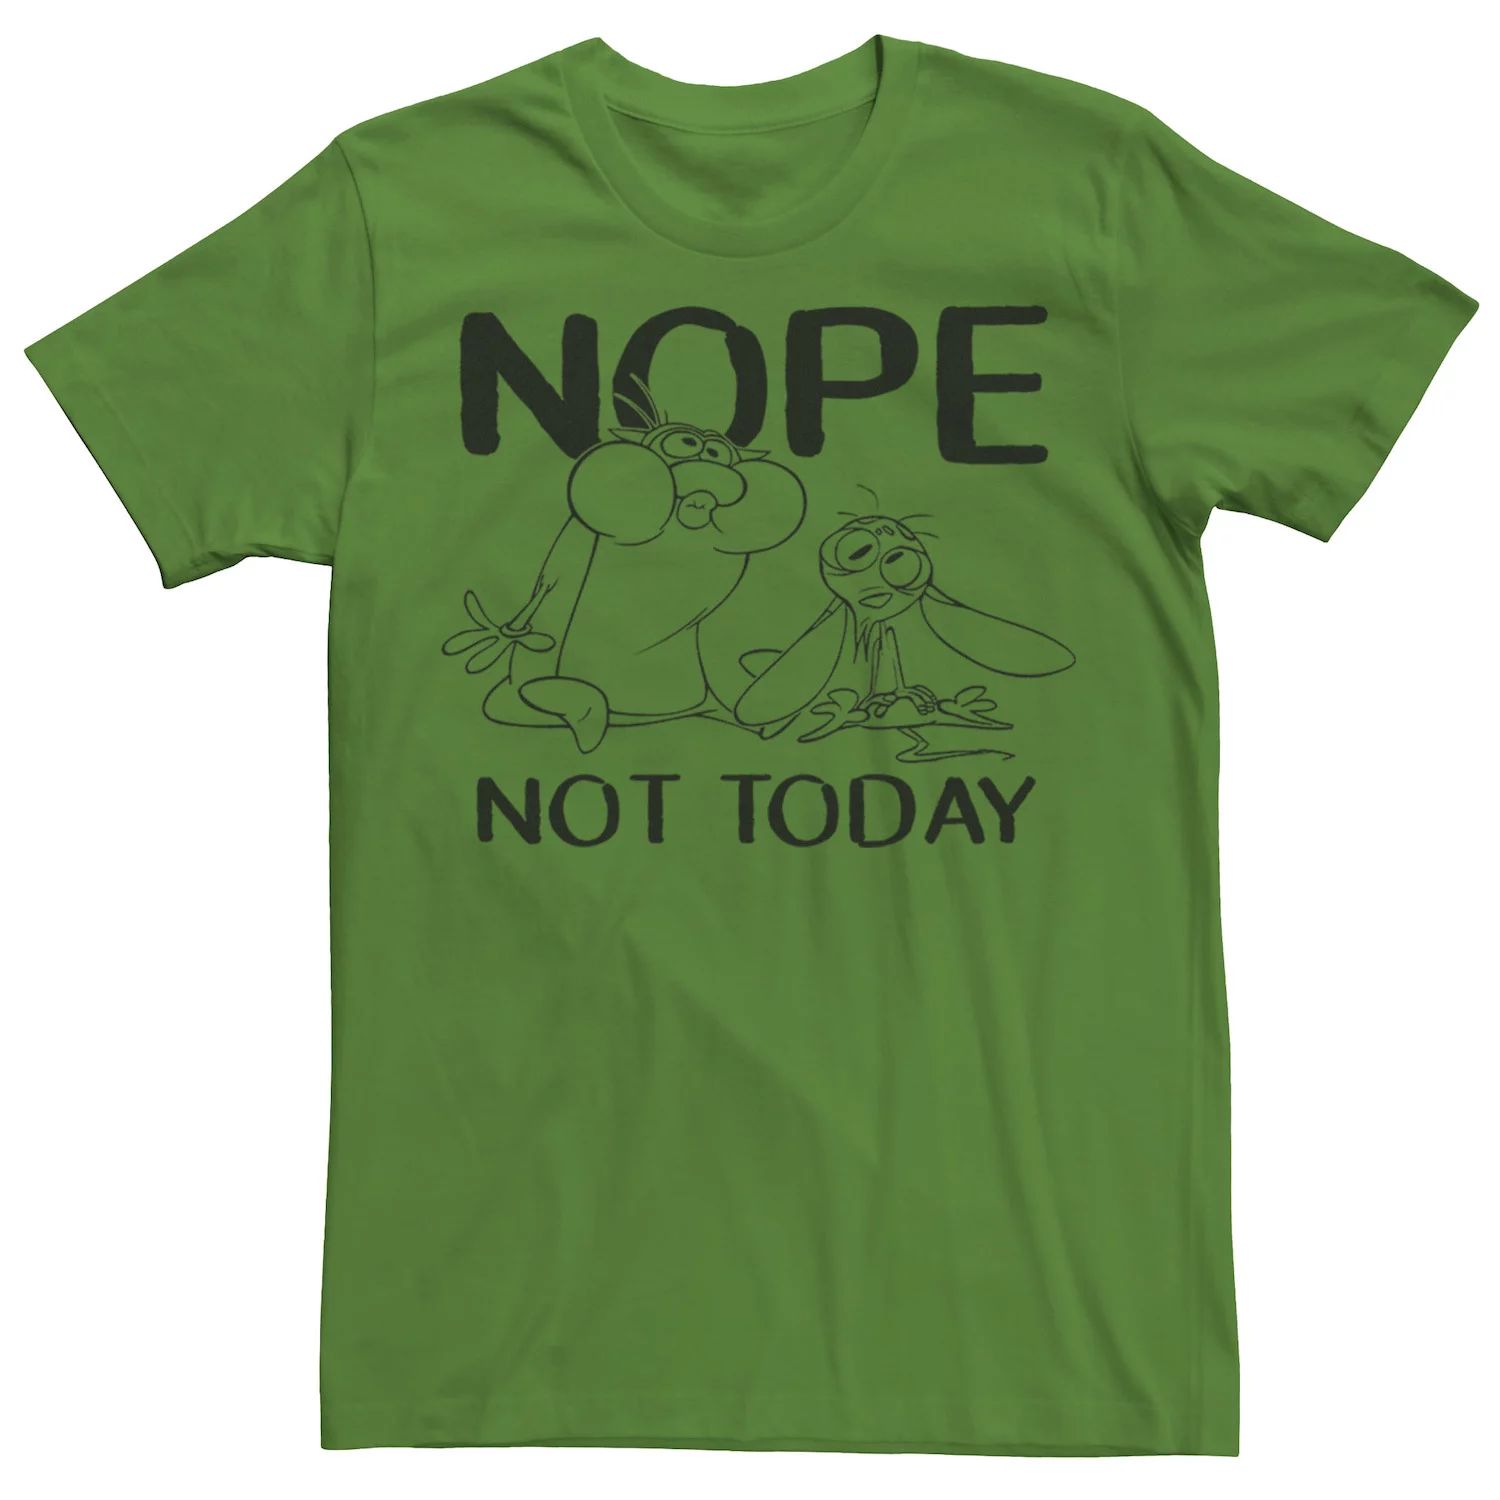 Мужская футболка Ren & Stimpy Nope Not Today с эскизом Nickelodeon